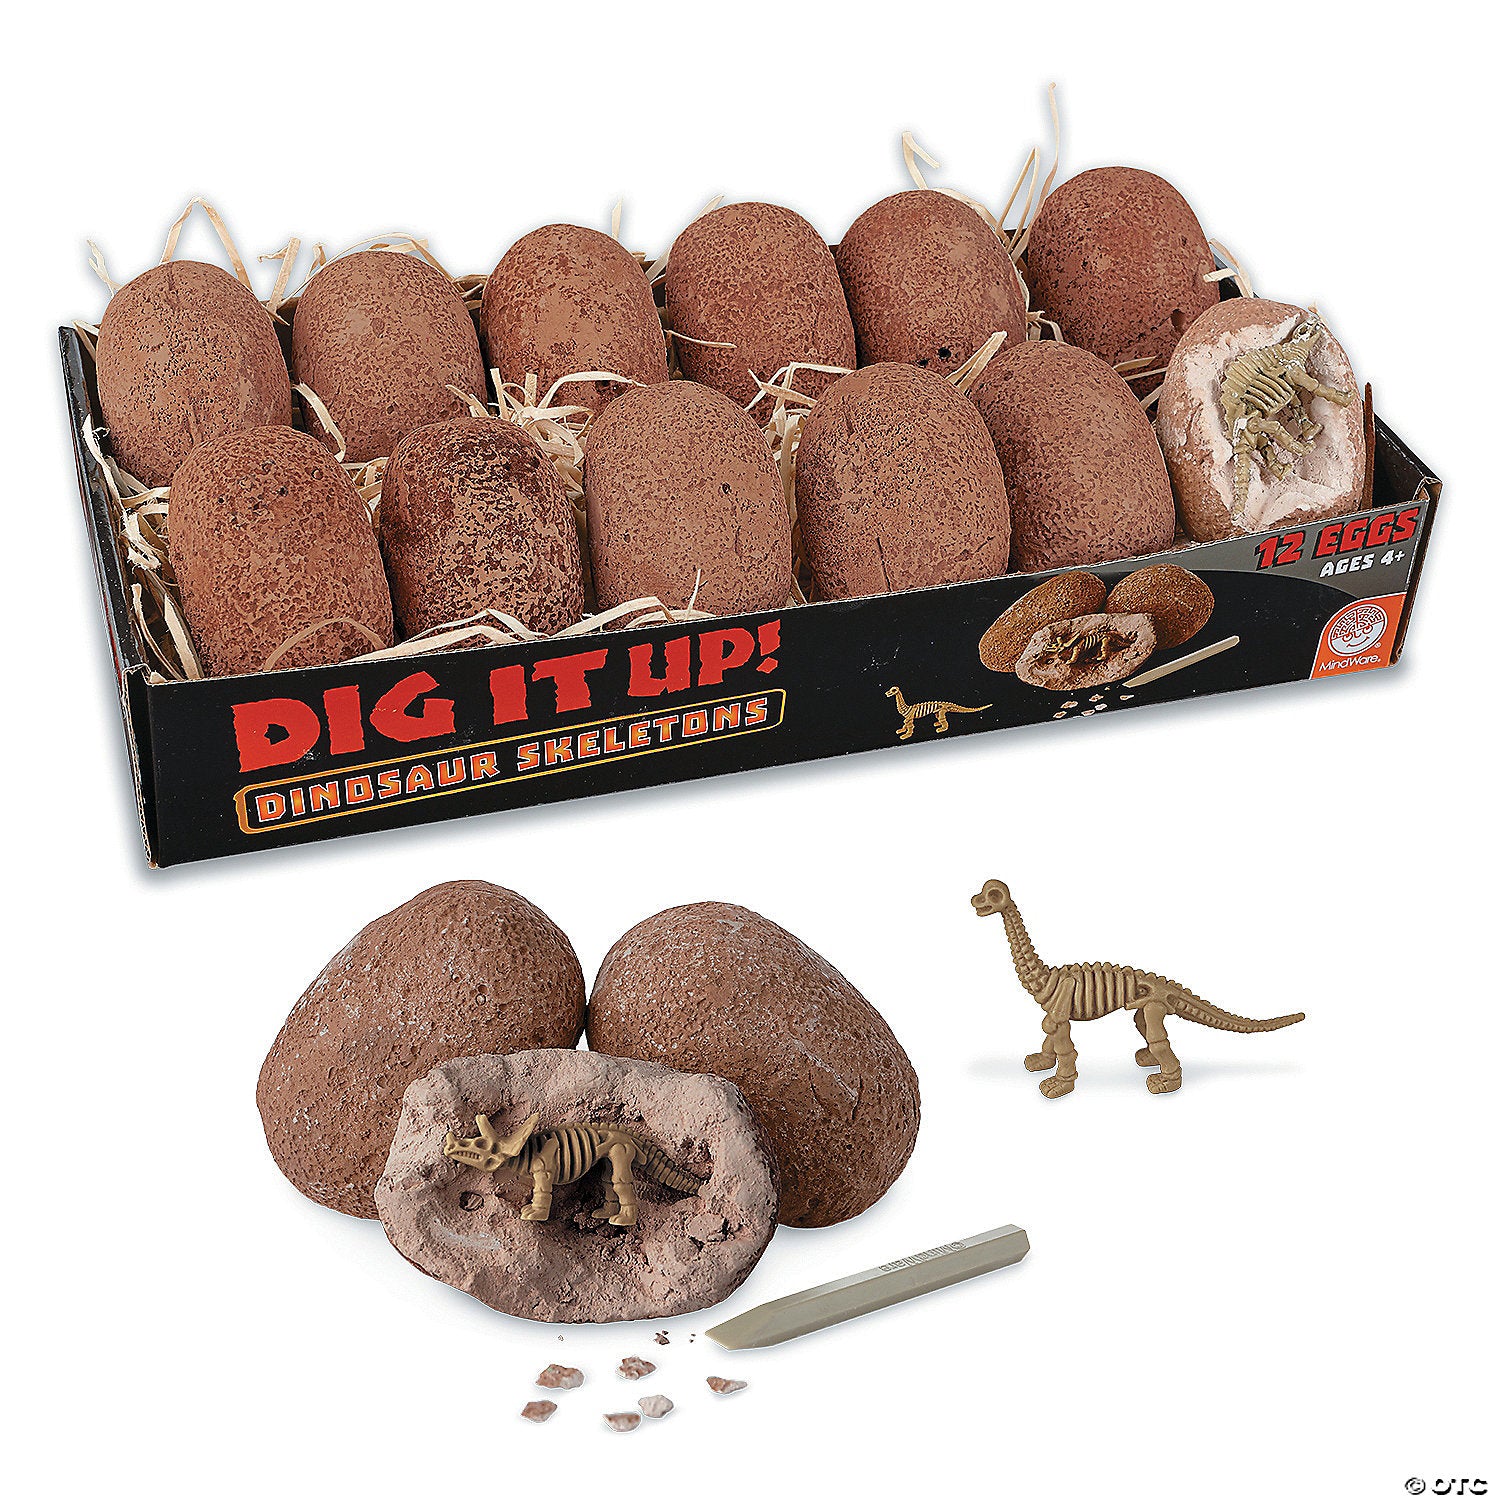 Dig It Up! Dinosaur Skeletons 12 Eggs by Mindware